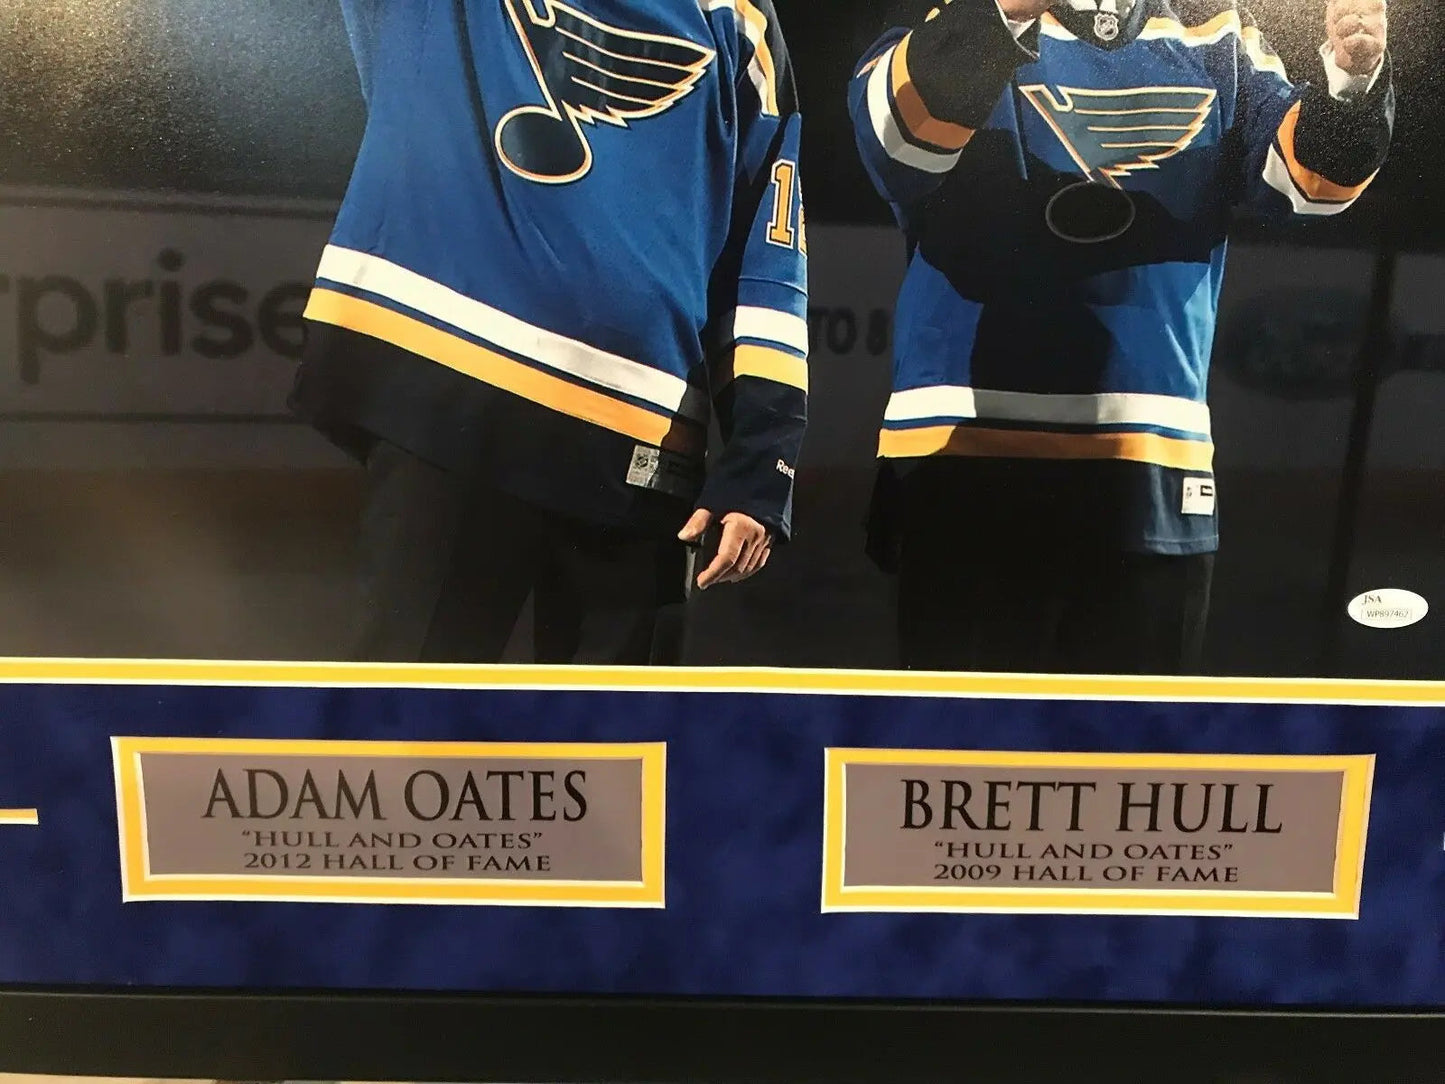 BRETT HULL St Louis Blues Autographed 34x42 Framed Hockey Jersey